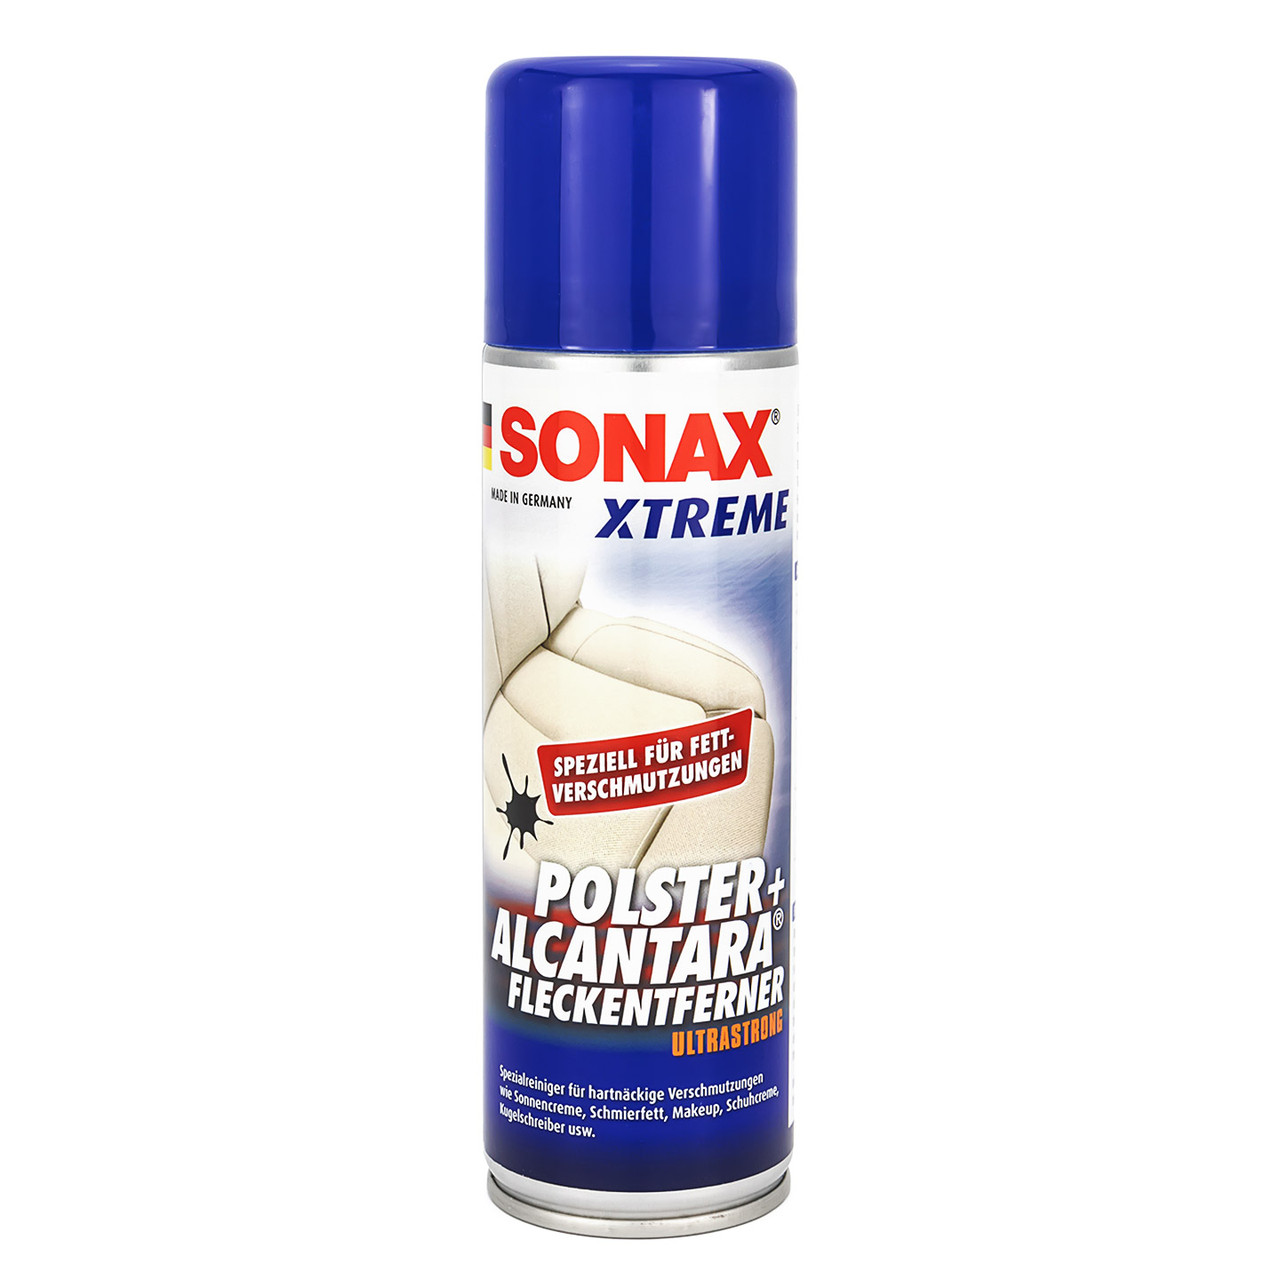 Sonax Upholstery & Alcantara Cleaner